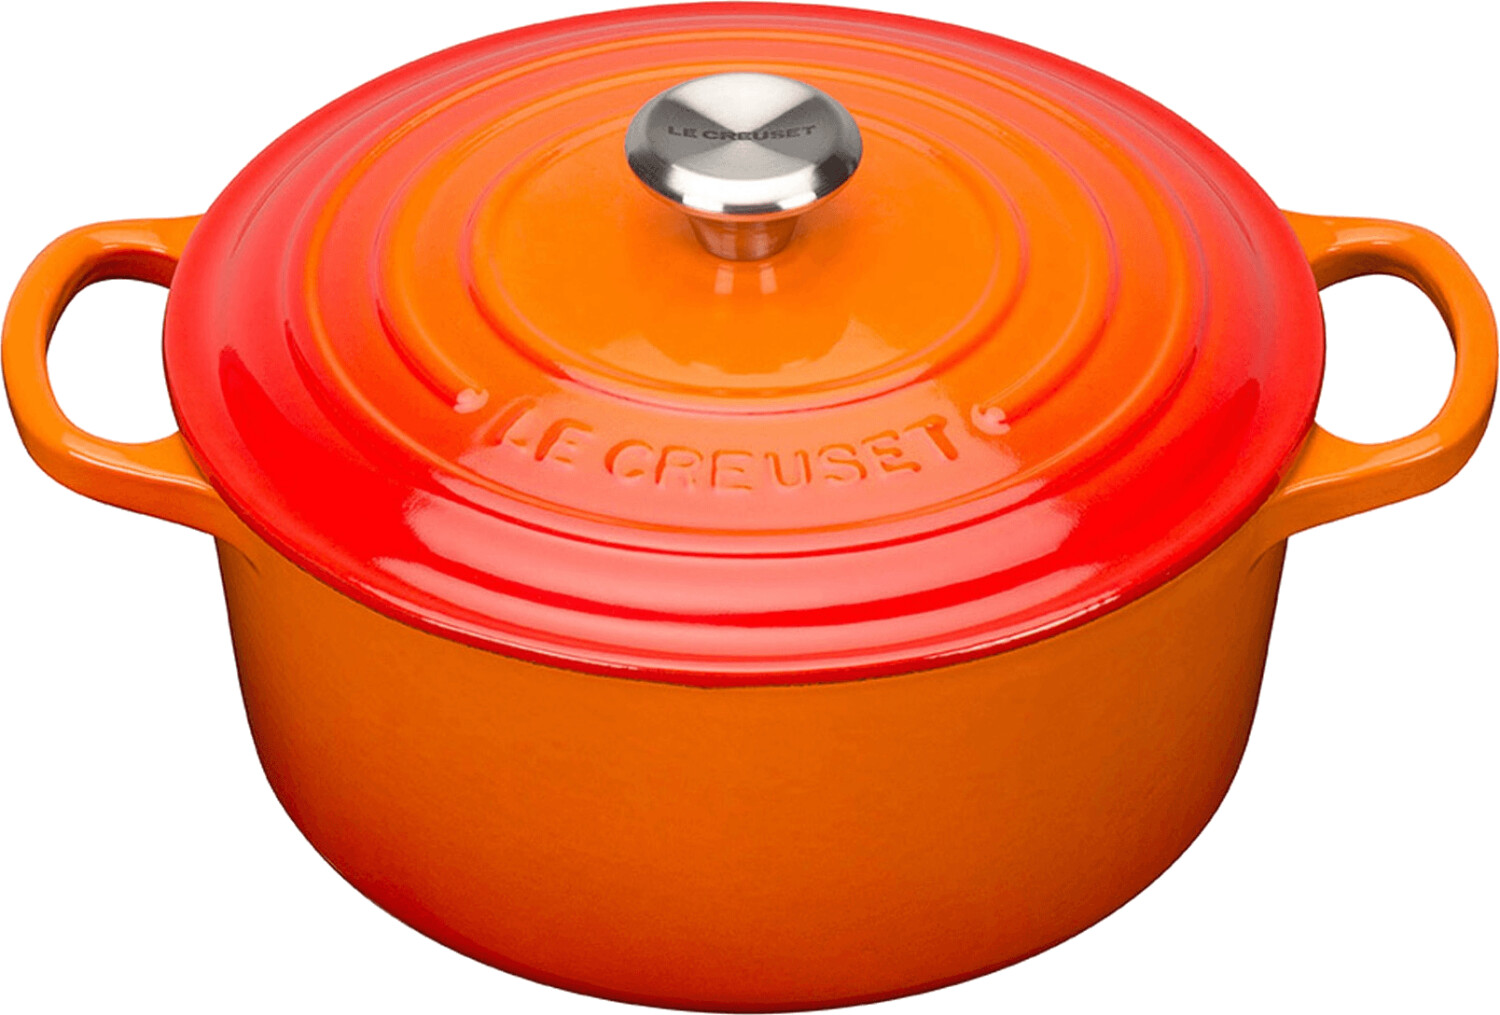 Photos - Stockpot Le Creuset Signature Round Casserole Dish 18 cm Oven Red 